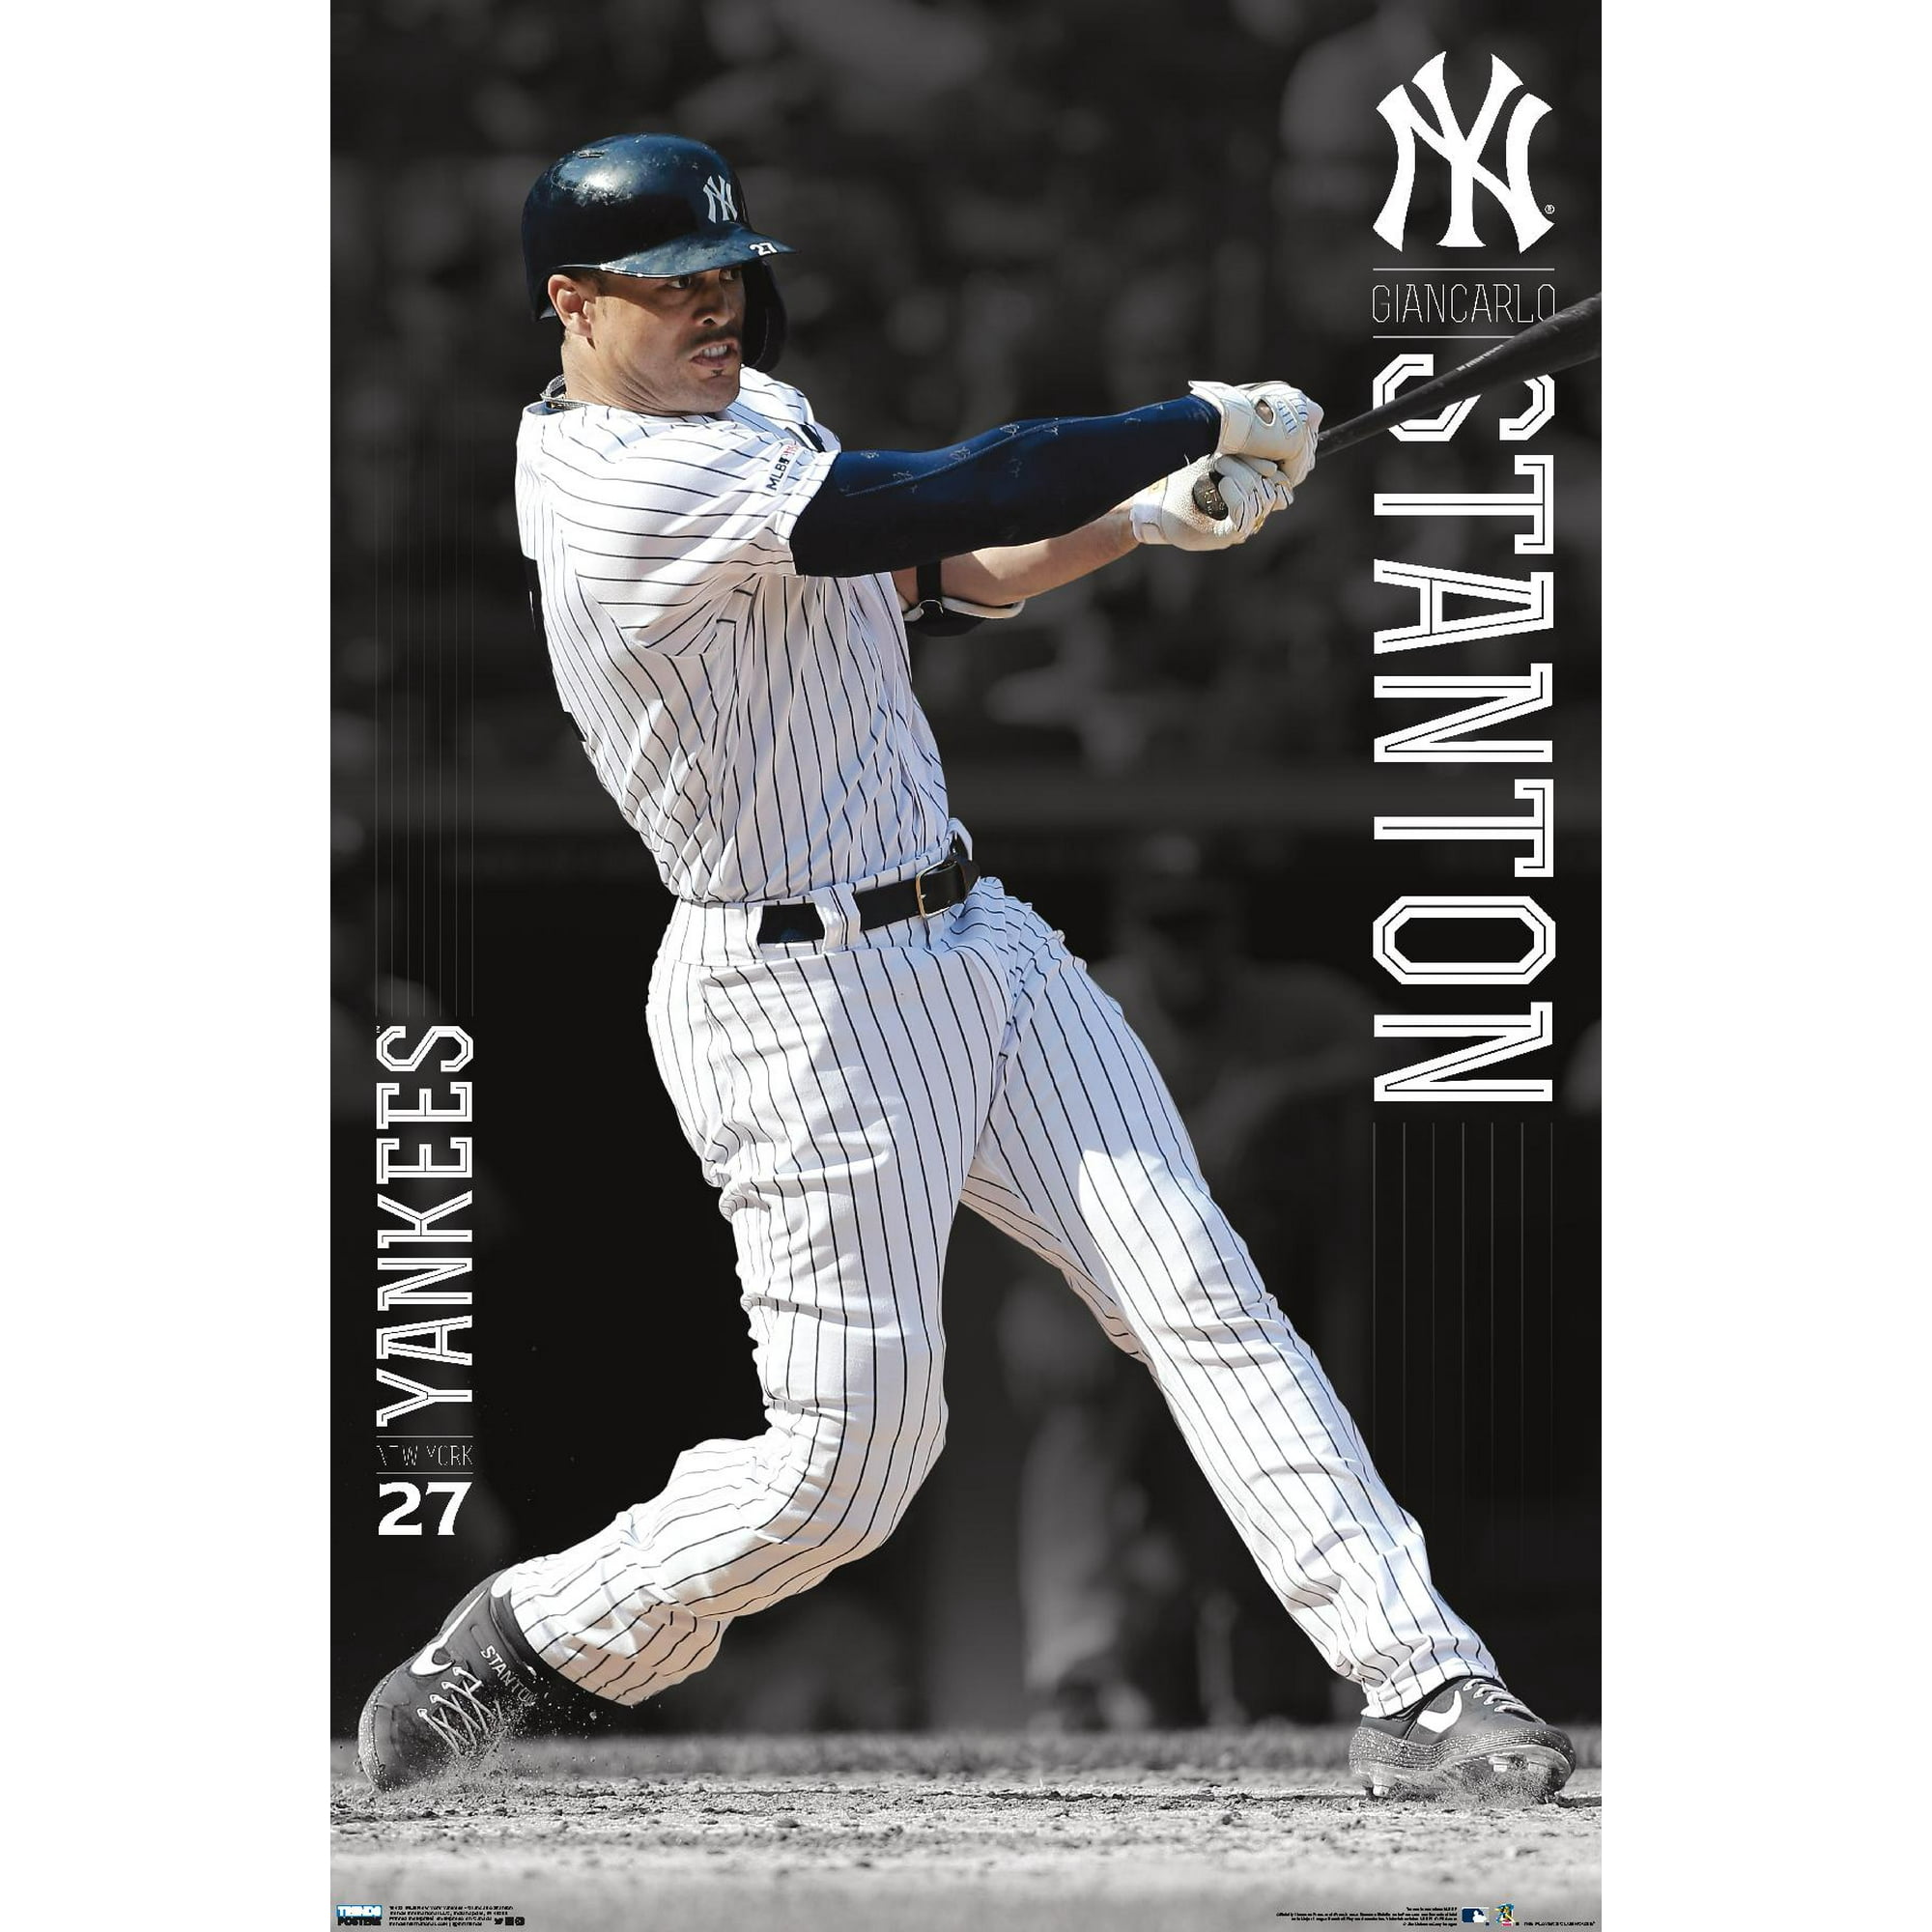 MLB New York Yankees - Giancarlo Stanton 20 Wall Poster, 22.375 x